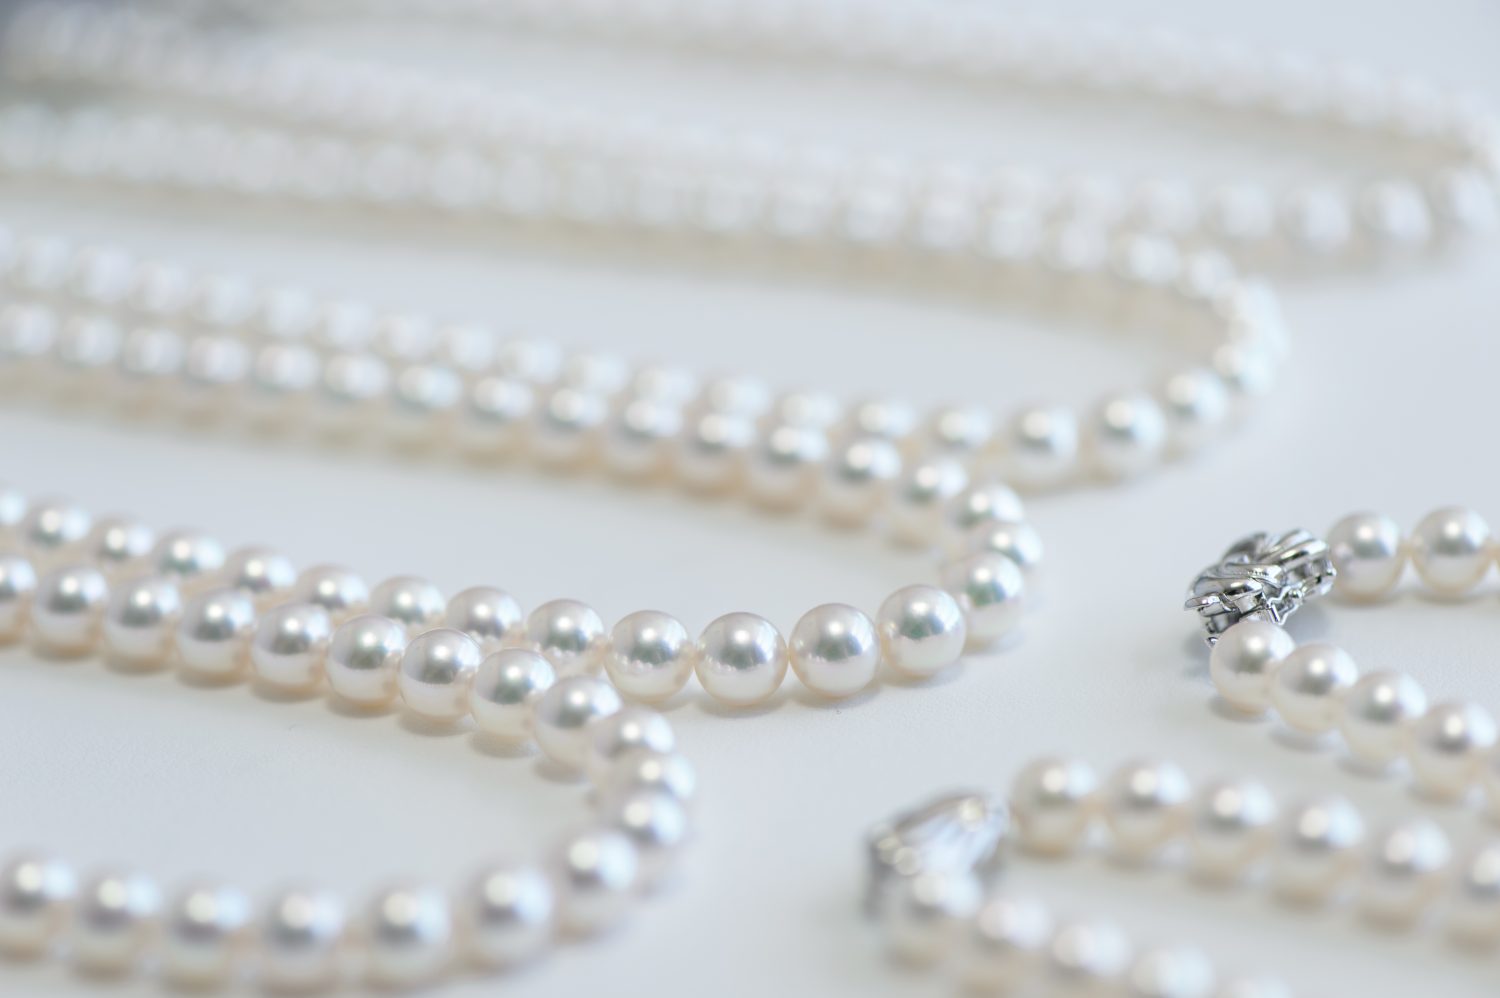 Harmonicity of pearls